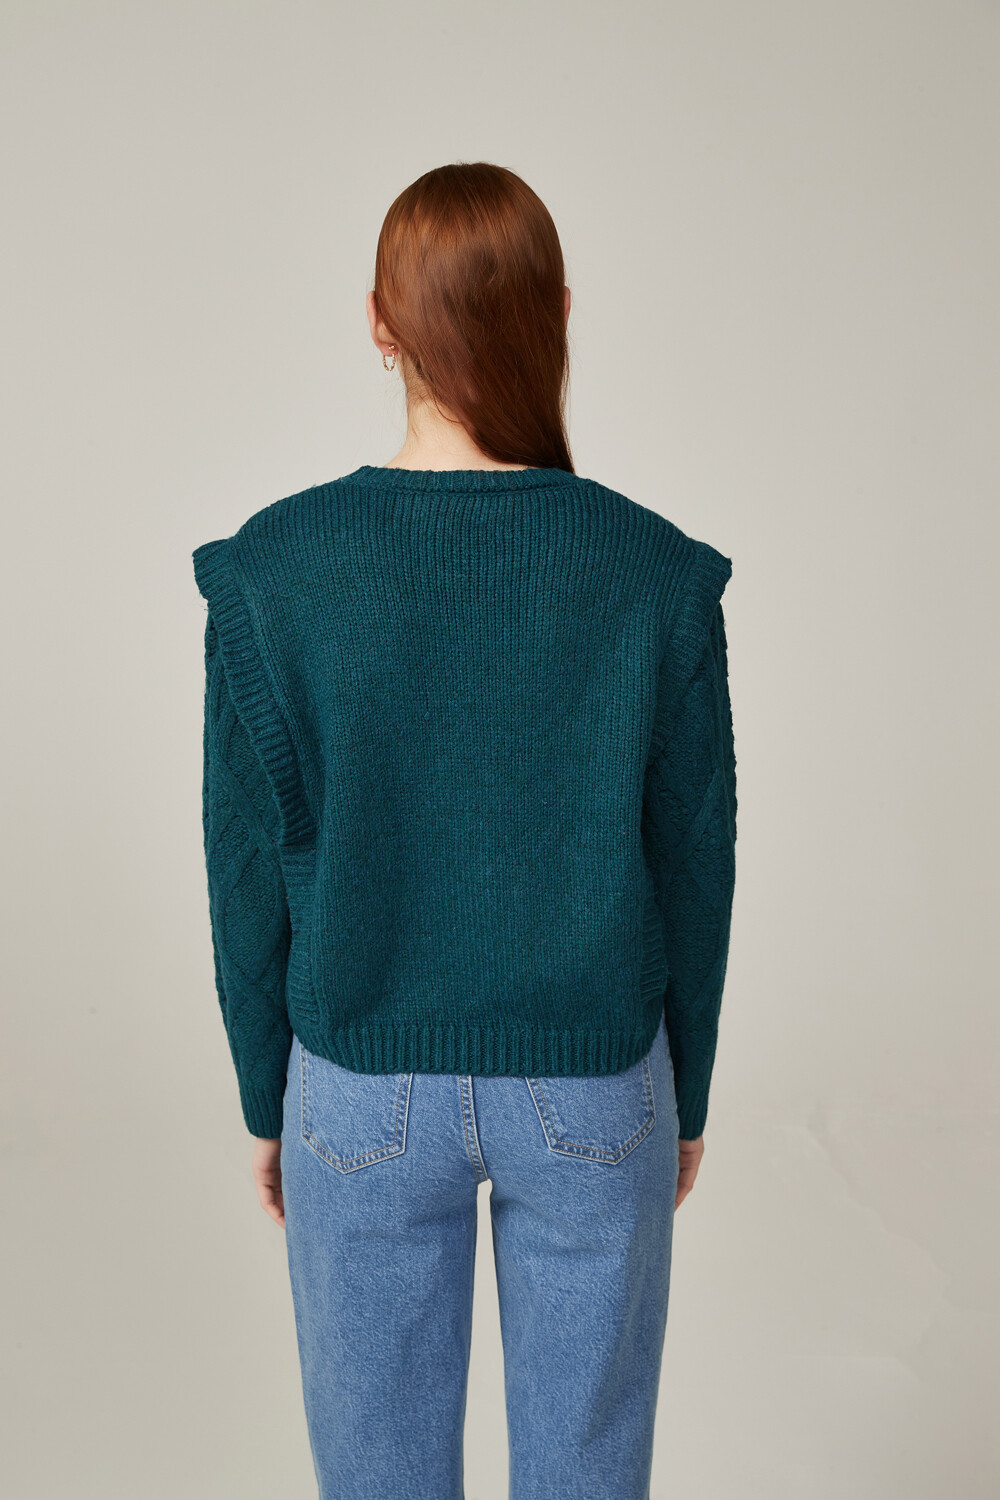 Sweater Arrigoni Petroleo Oscuro